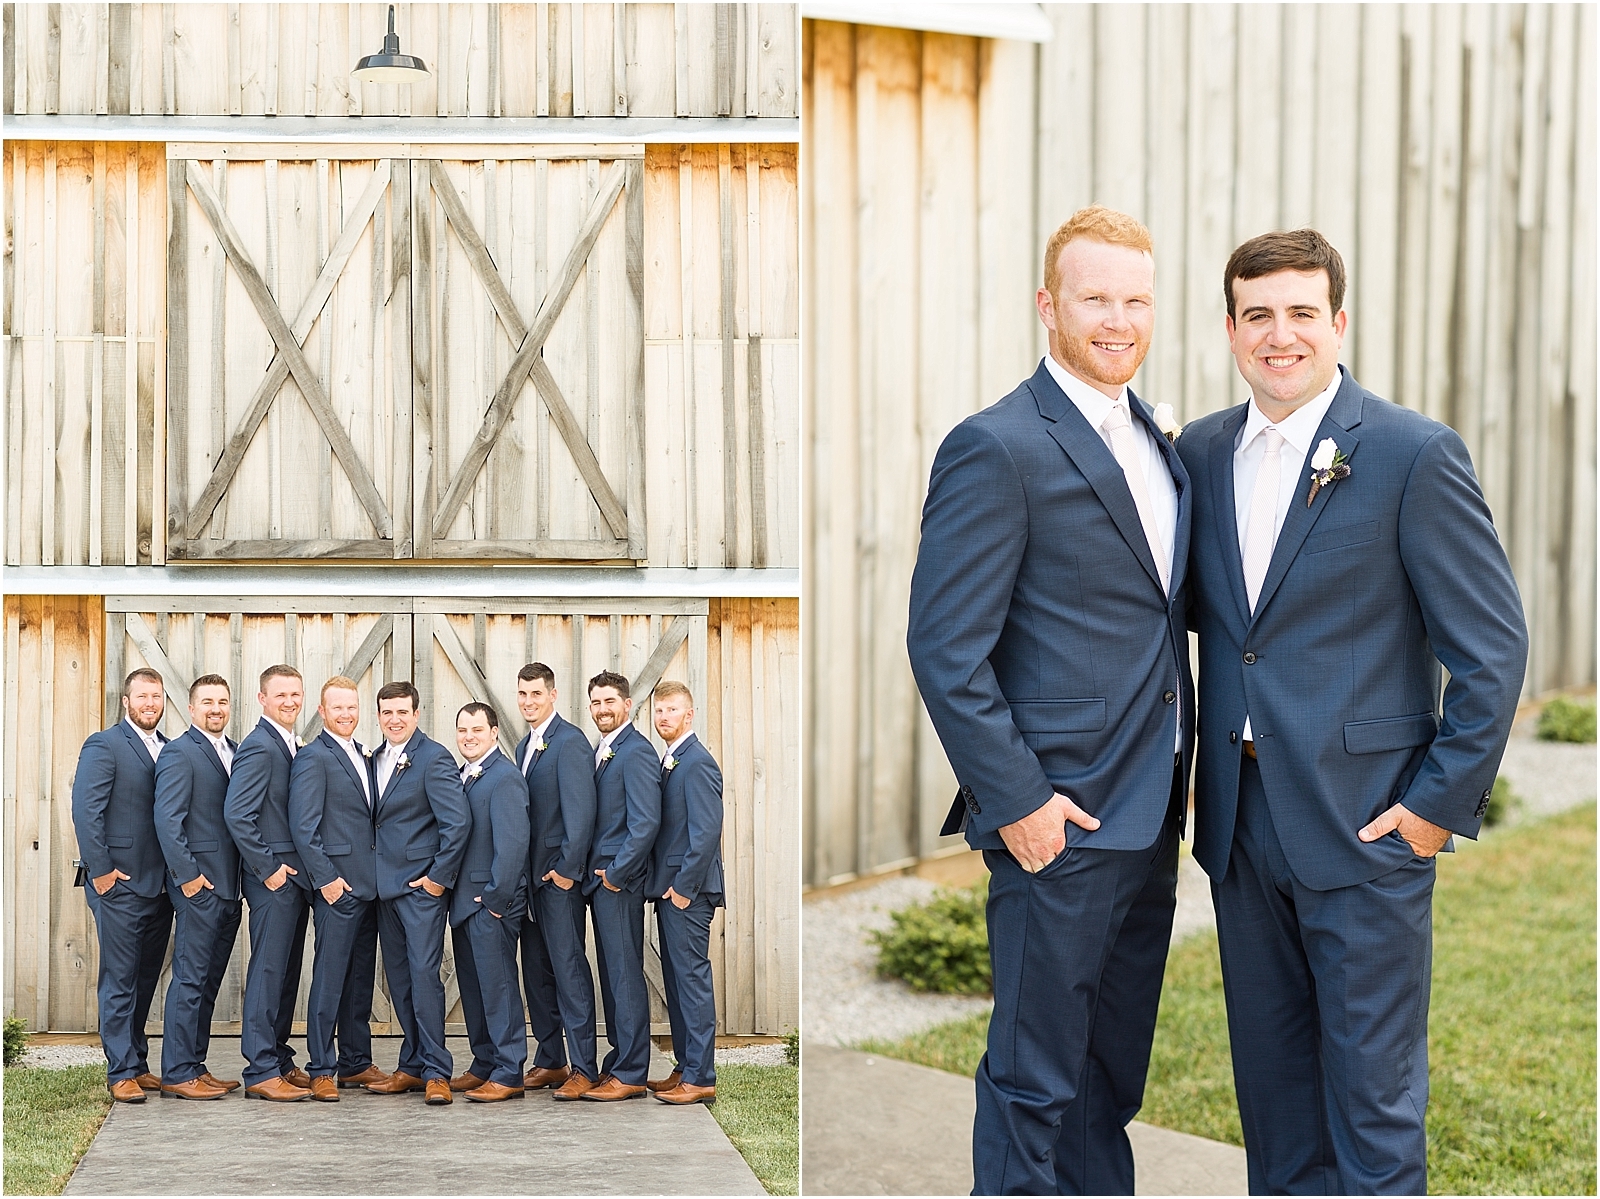 Rachel and Michael | Bret and Brandie Photography | Evansville Wedding Photographers 0042.jpg